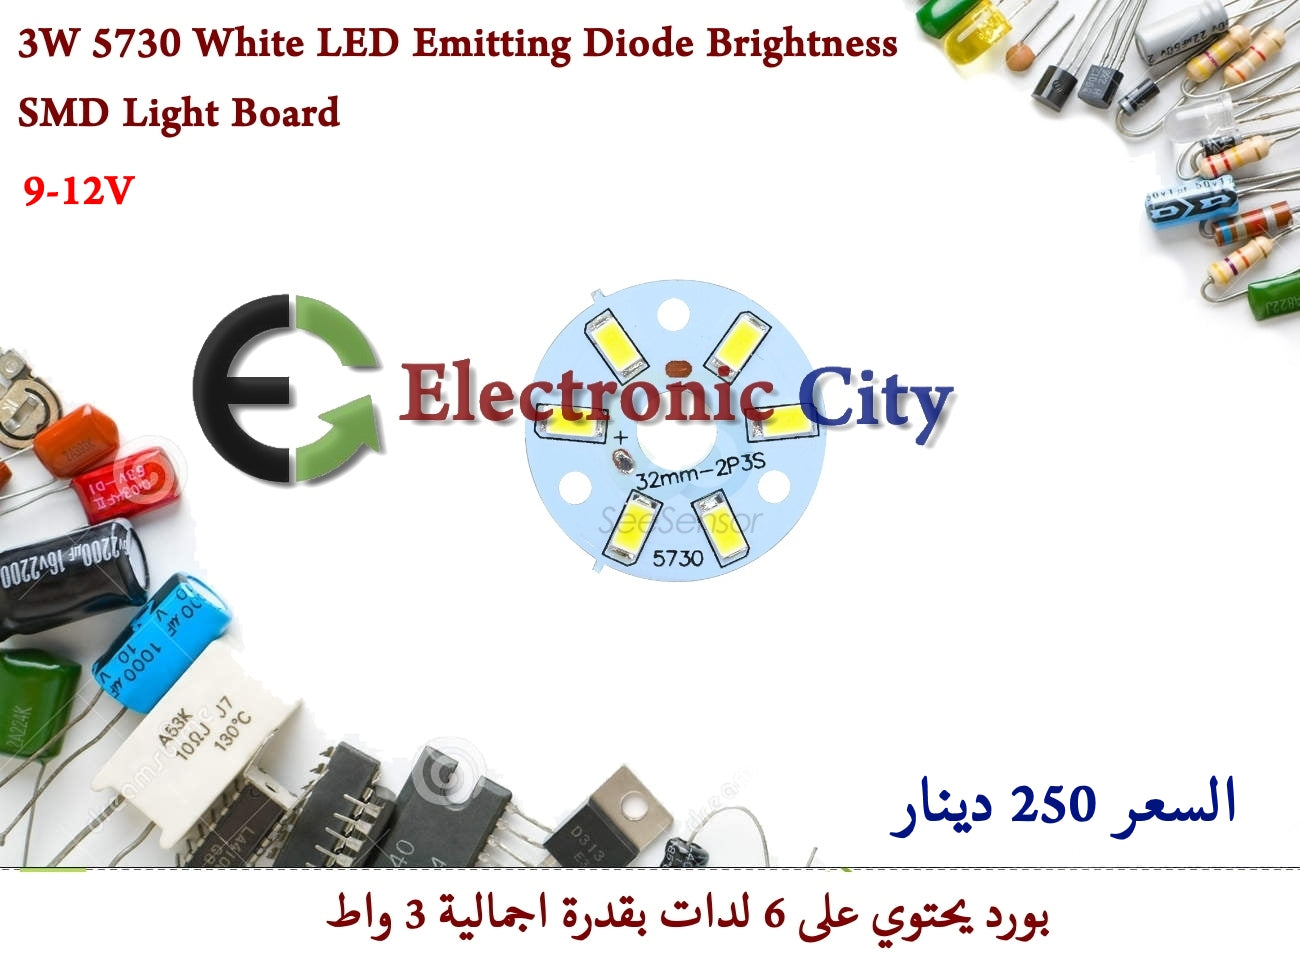 3W 5730 White LED Emitting Diode Brightness SMD Light Board #P1 03018410